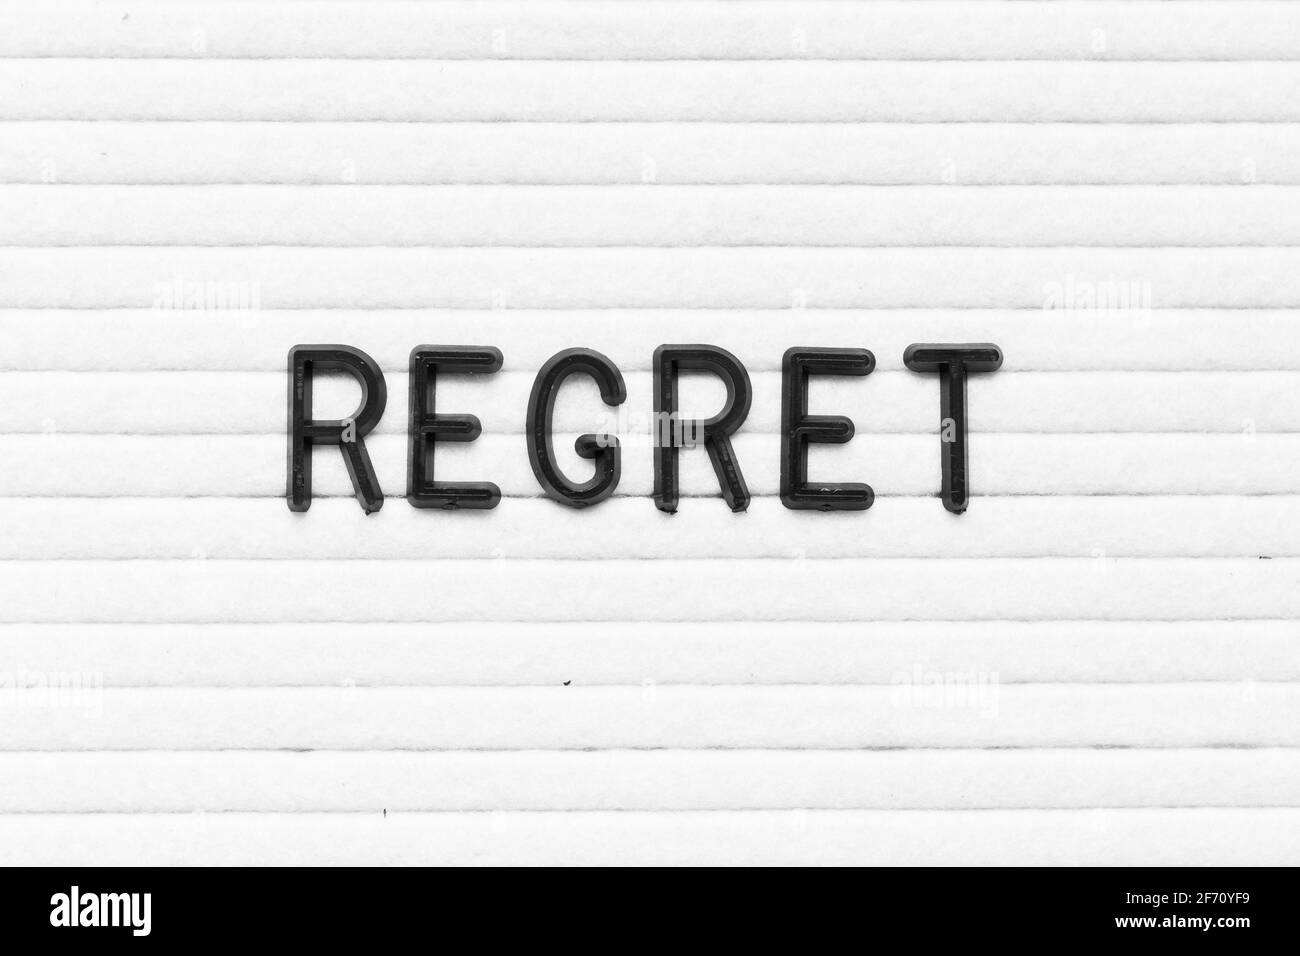 Black color letter in word regret on white felt board background Stock Photo